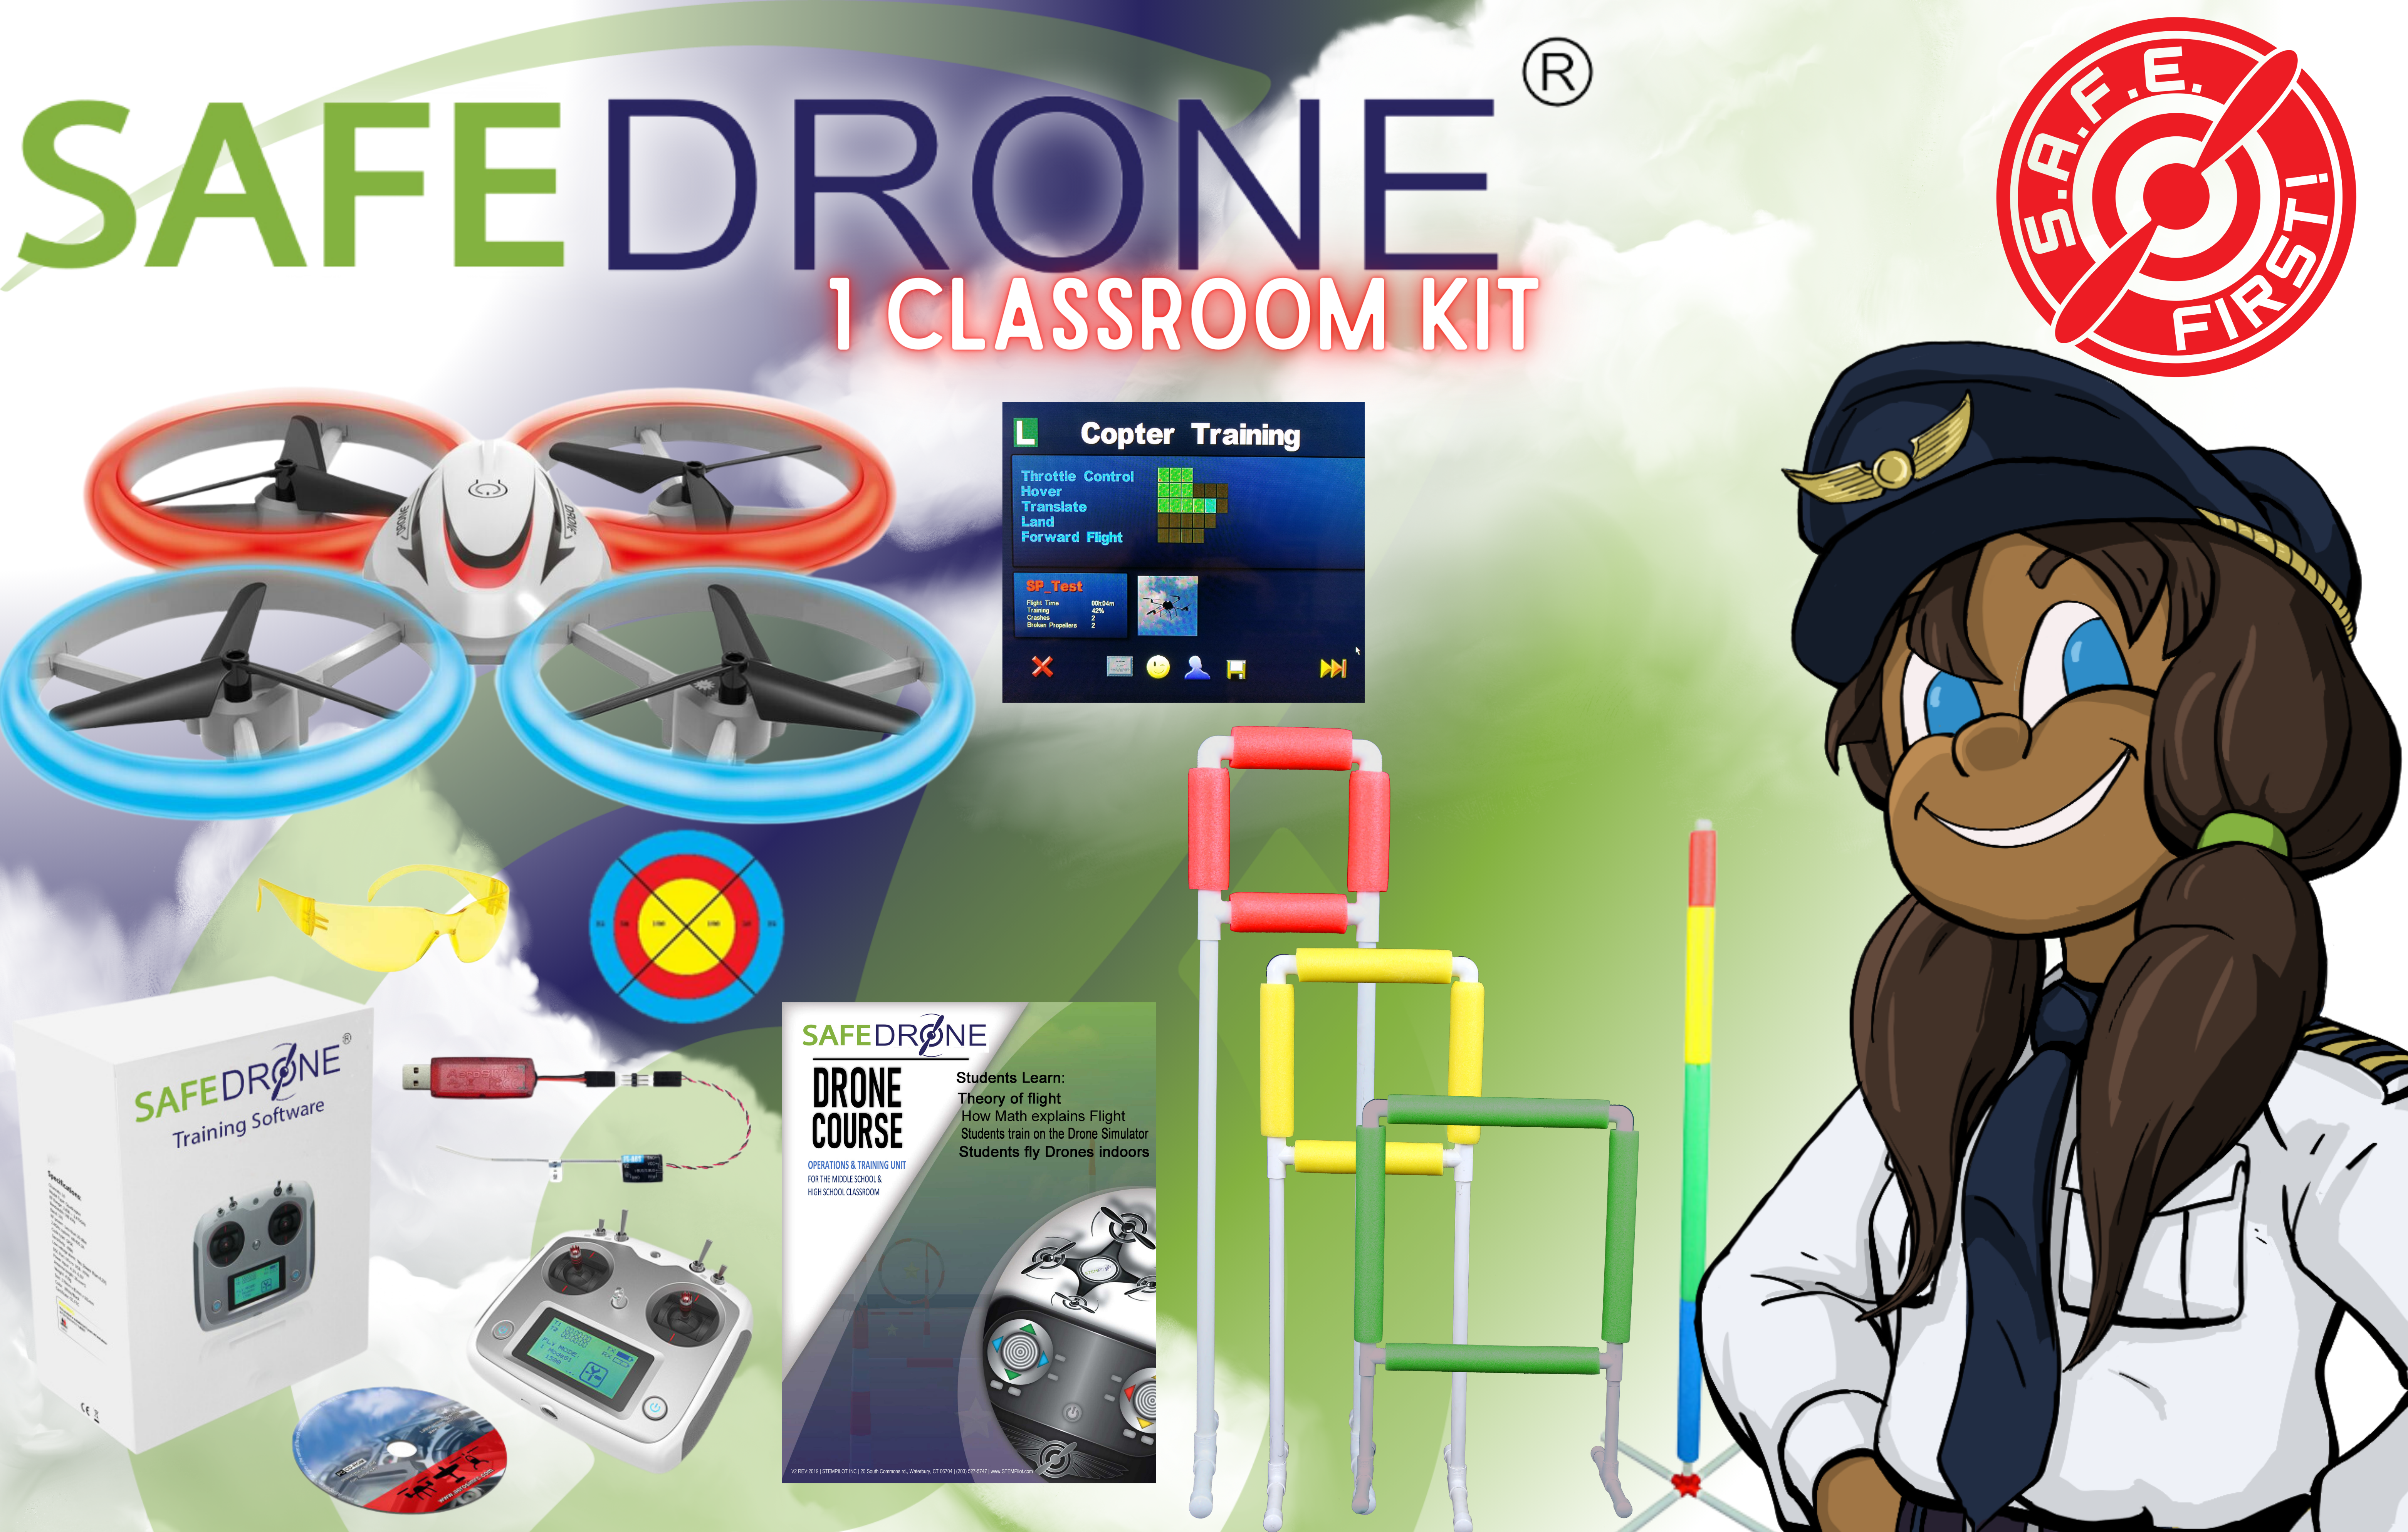 SAFEDrone Classroom 1 Kit Image